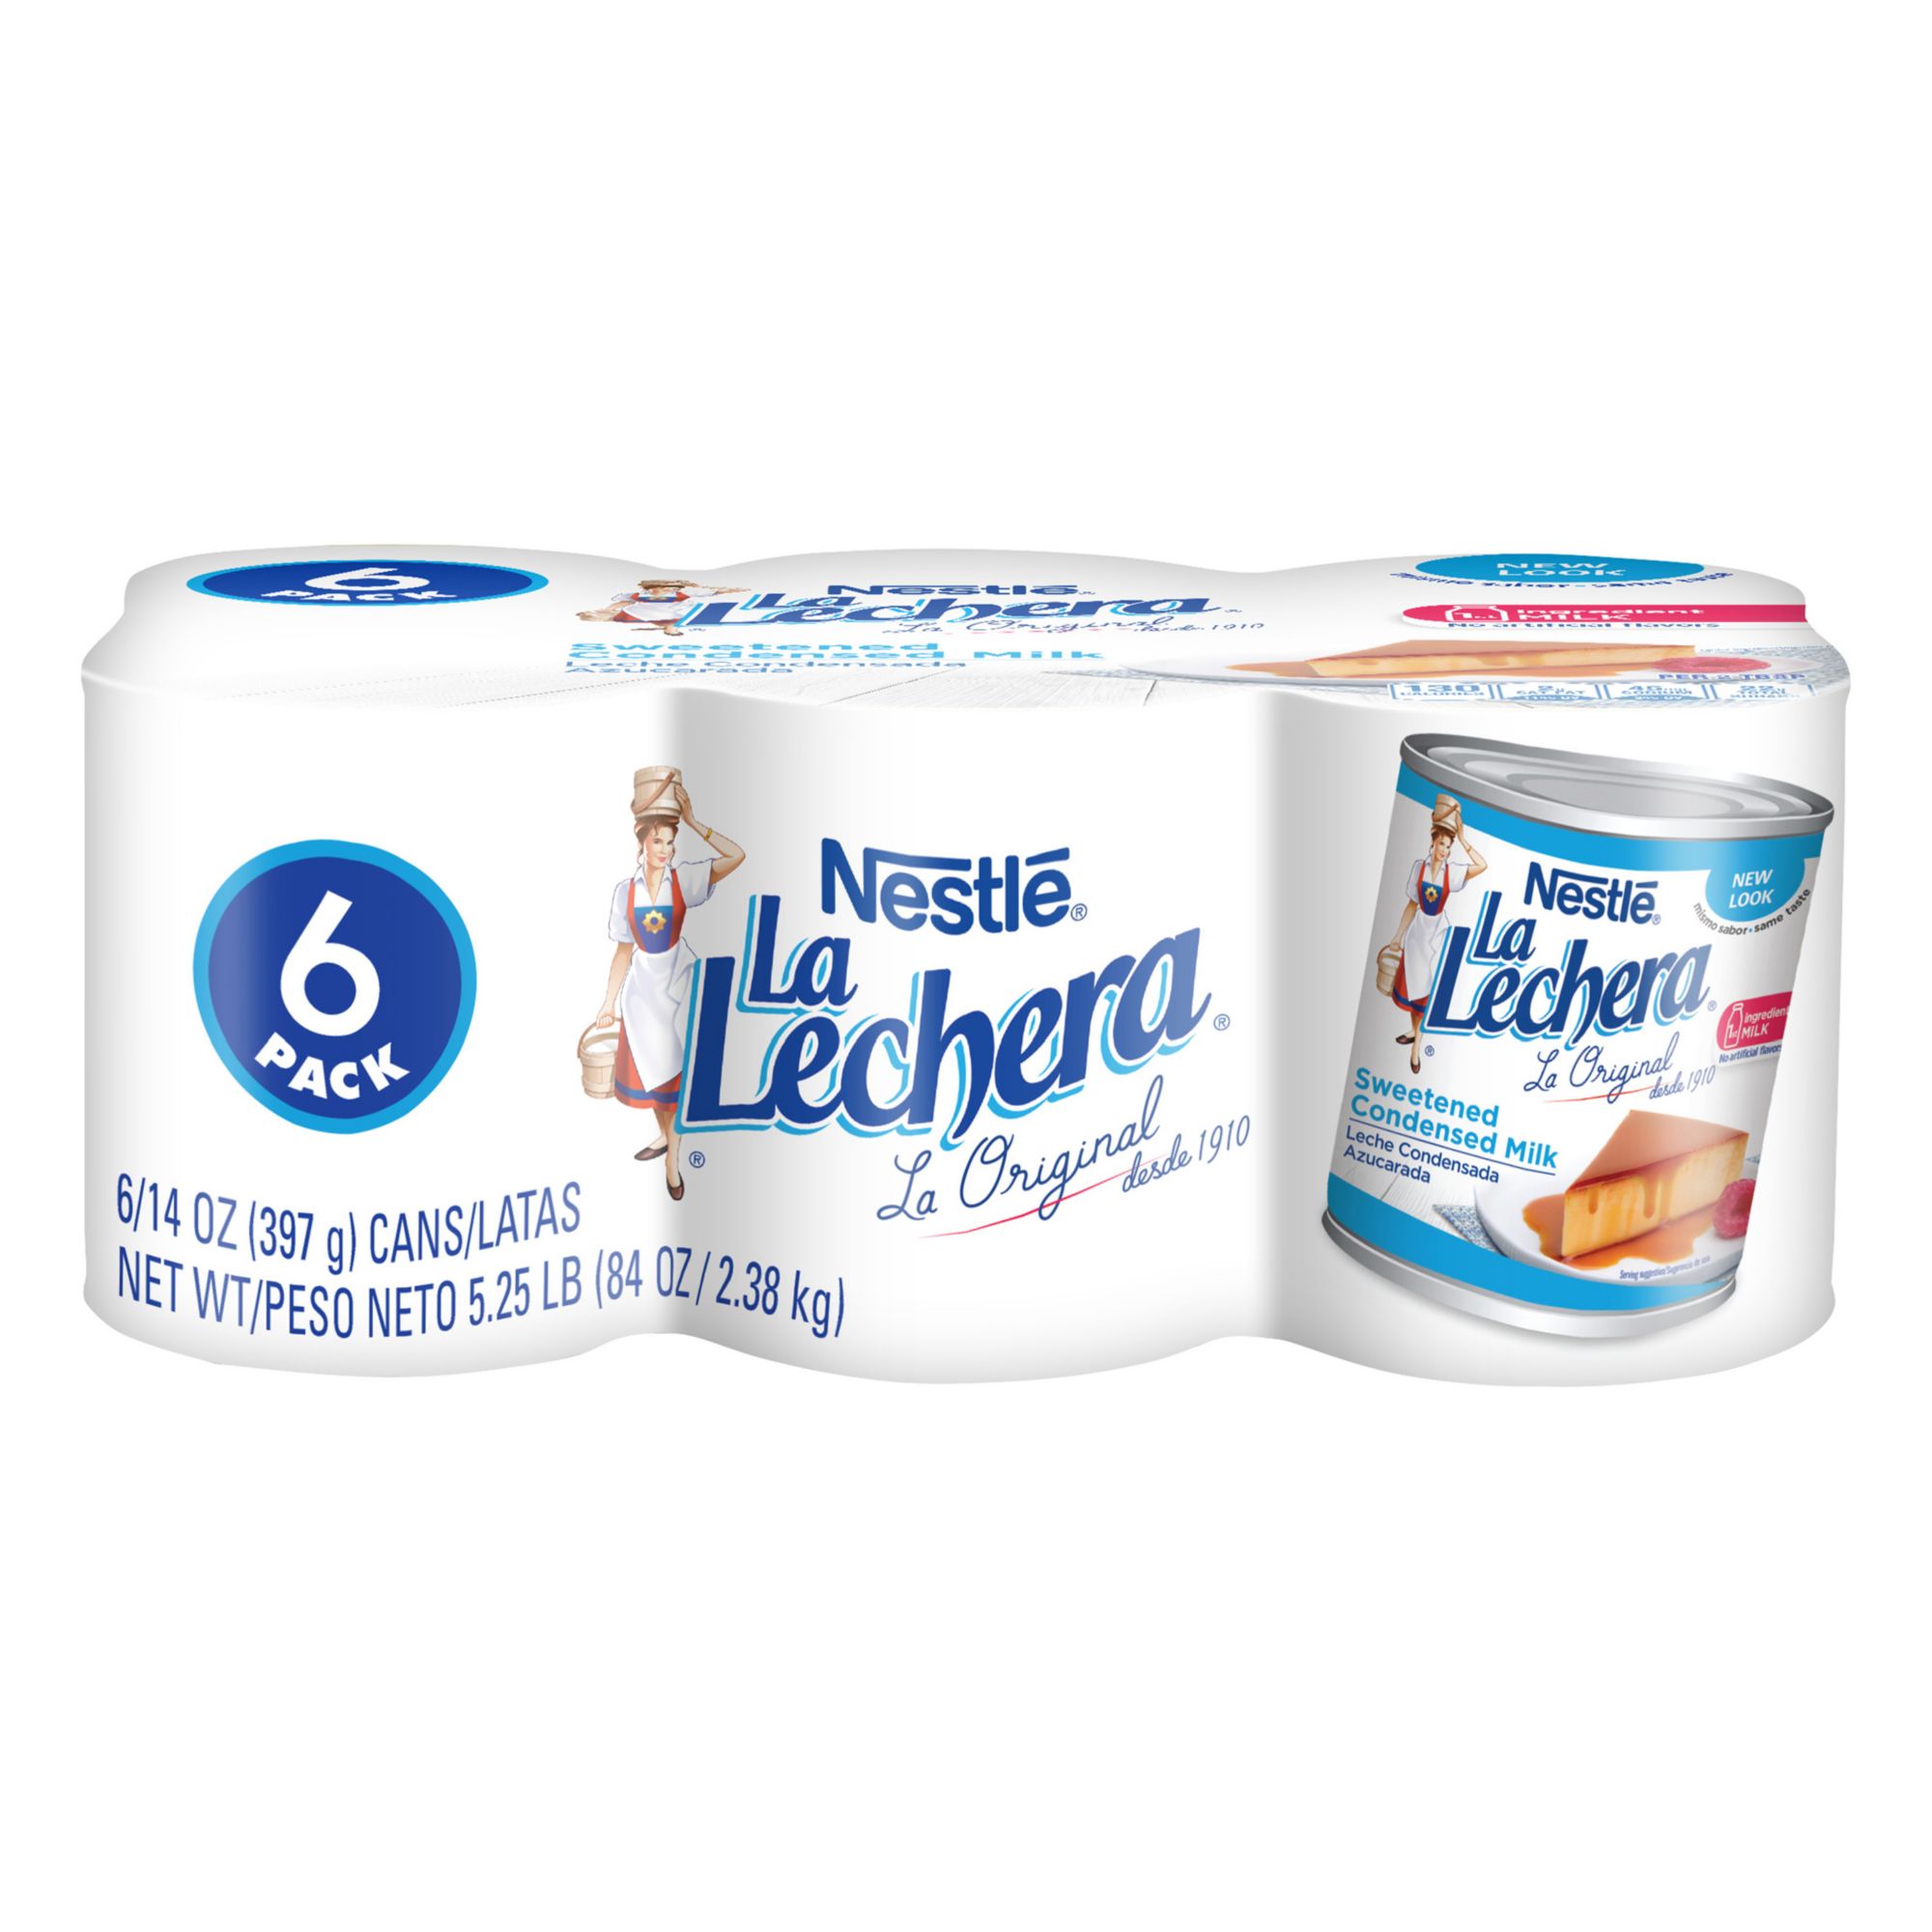 Nestle La Lechera Sweetened Condensed Milk Cans, 5.25 lbs.